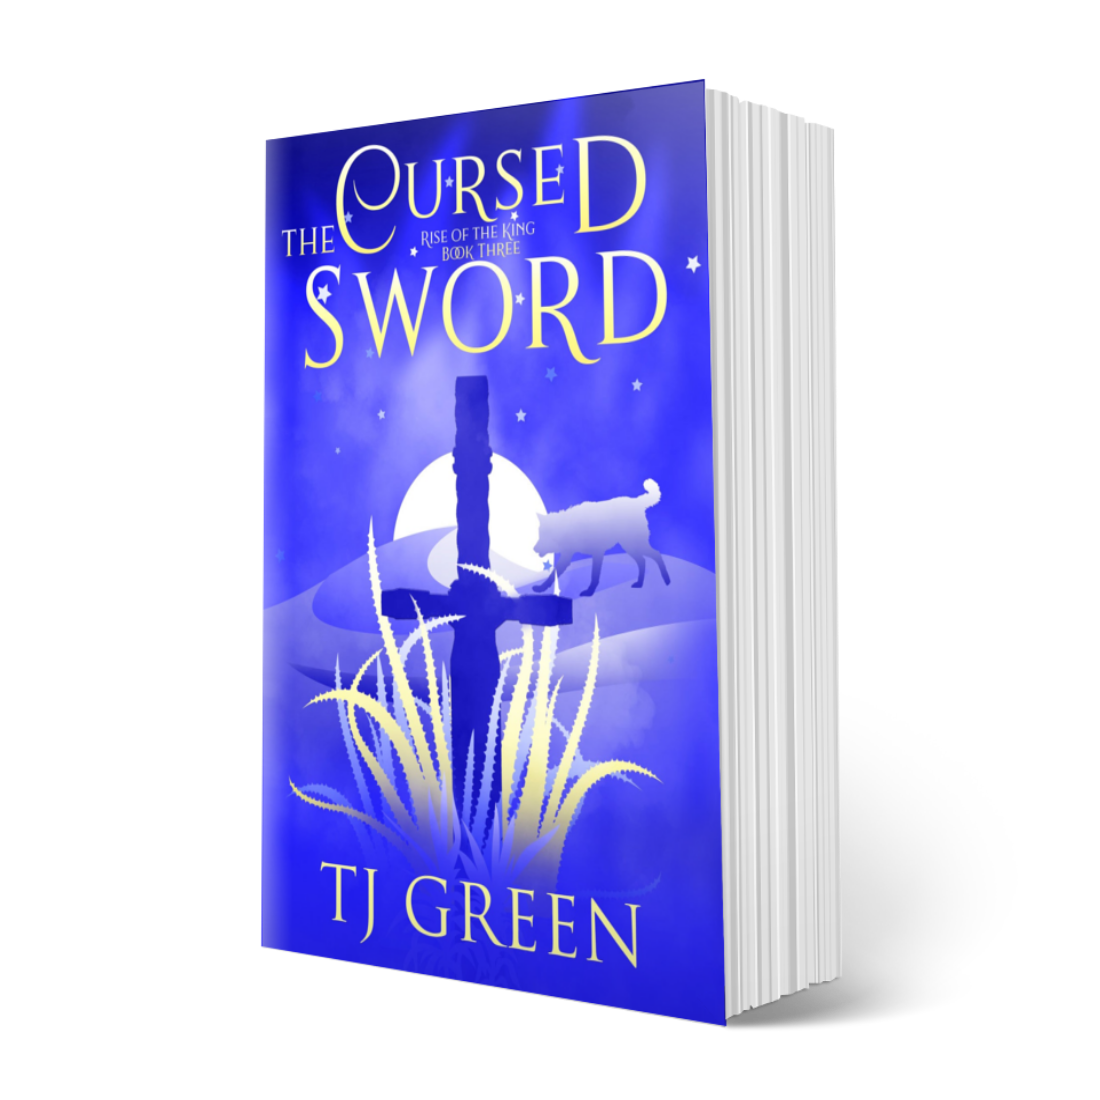 The curse sword, YA fantasy, Arthurian Fantasy, magic, King Arthur, myth and legend